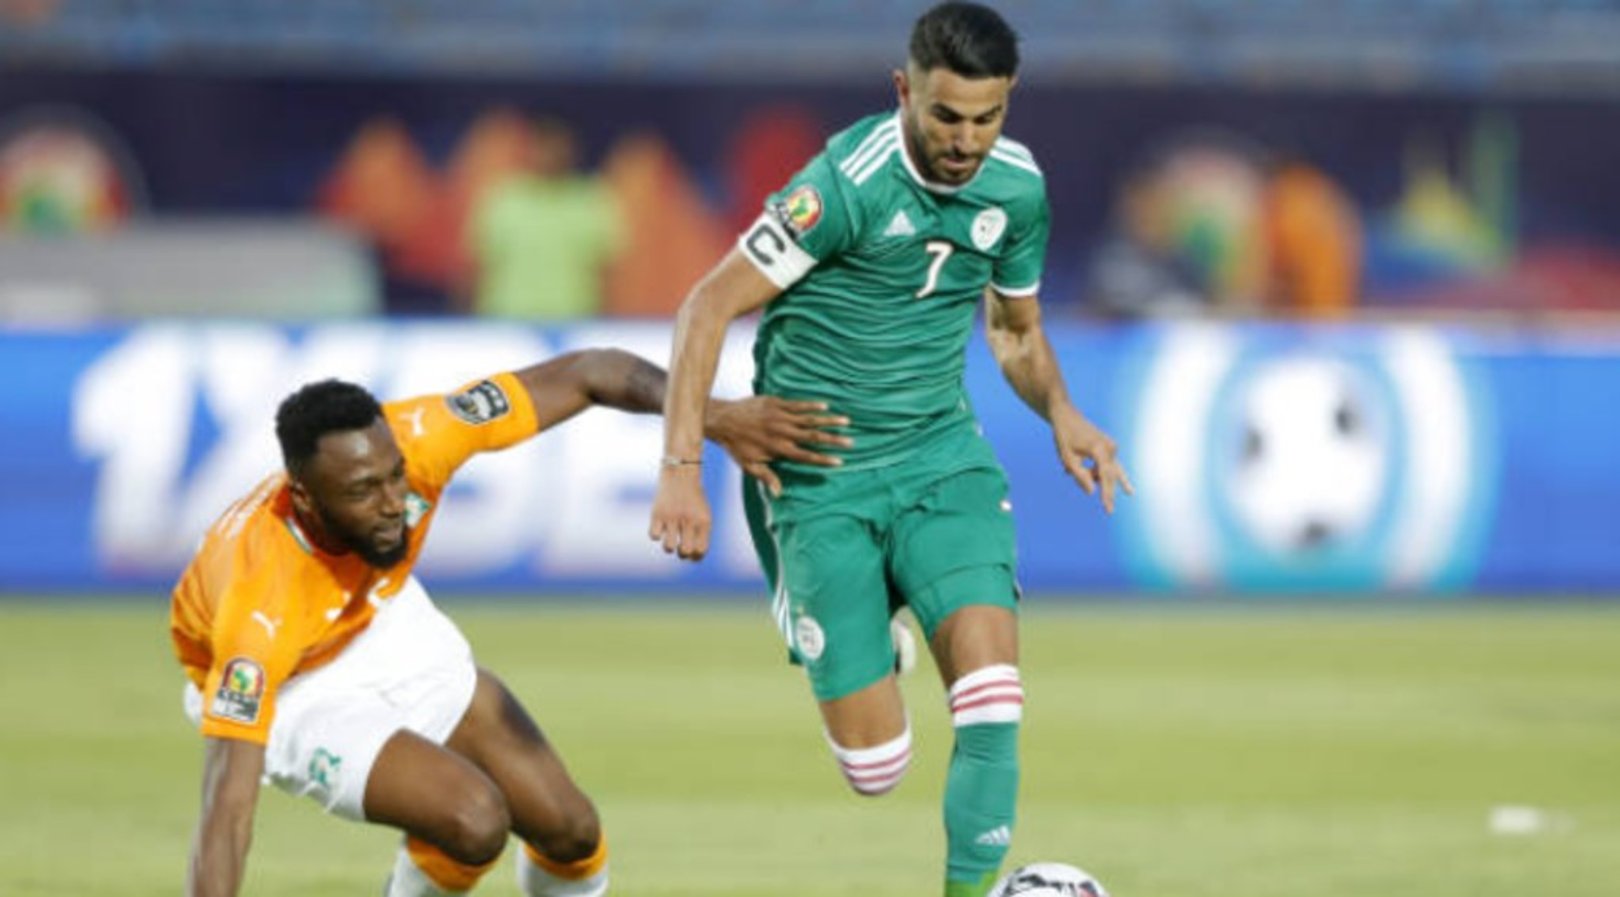 AFCON semi-finals beckon for Algeria's Mahrez